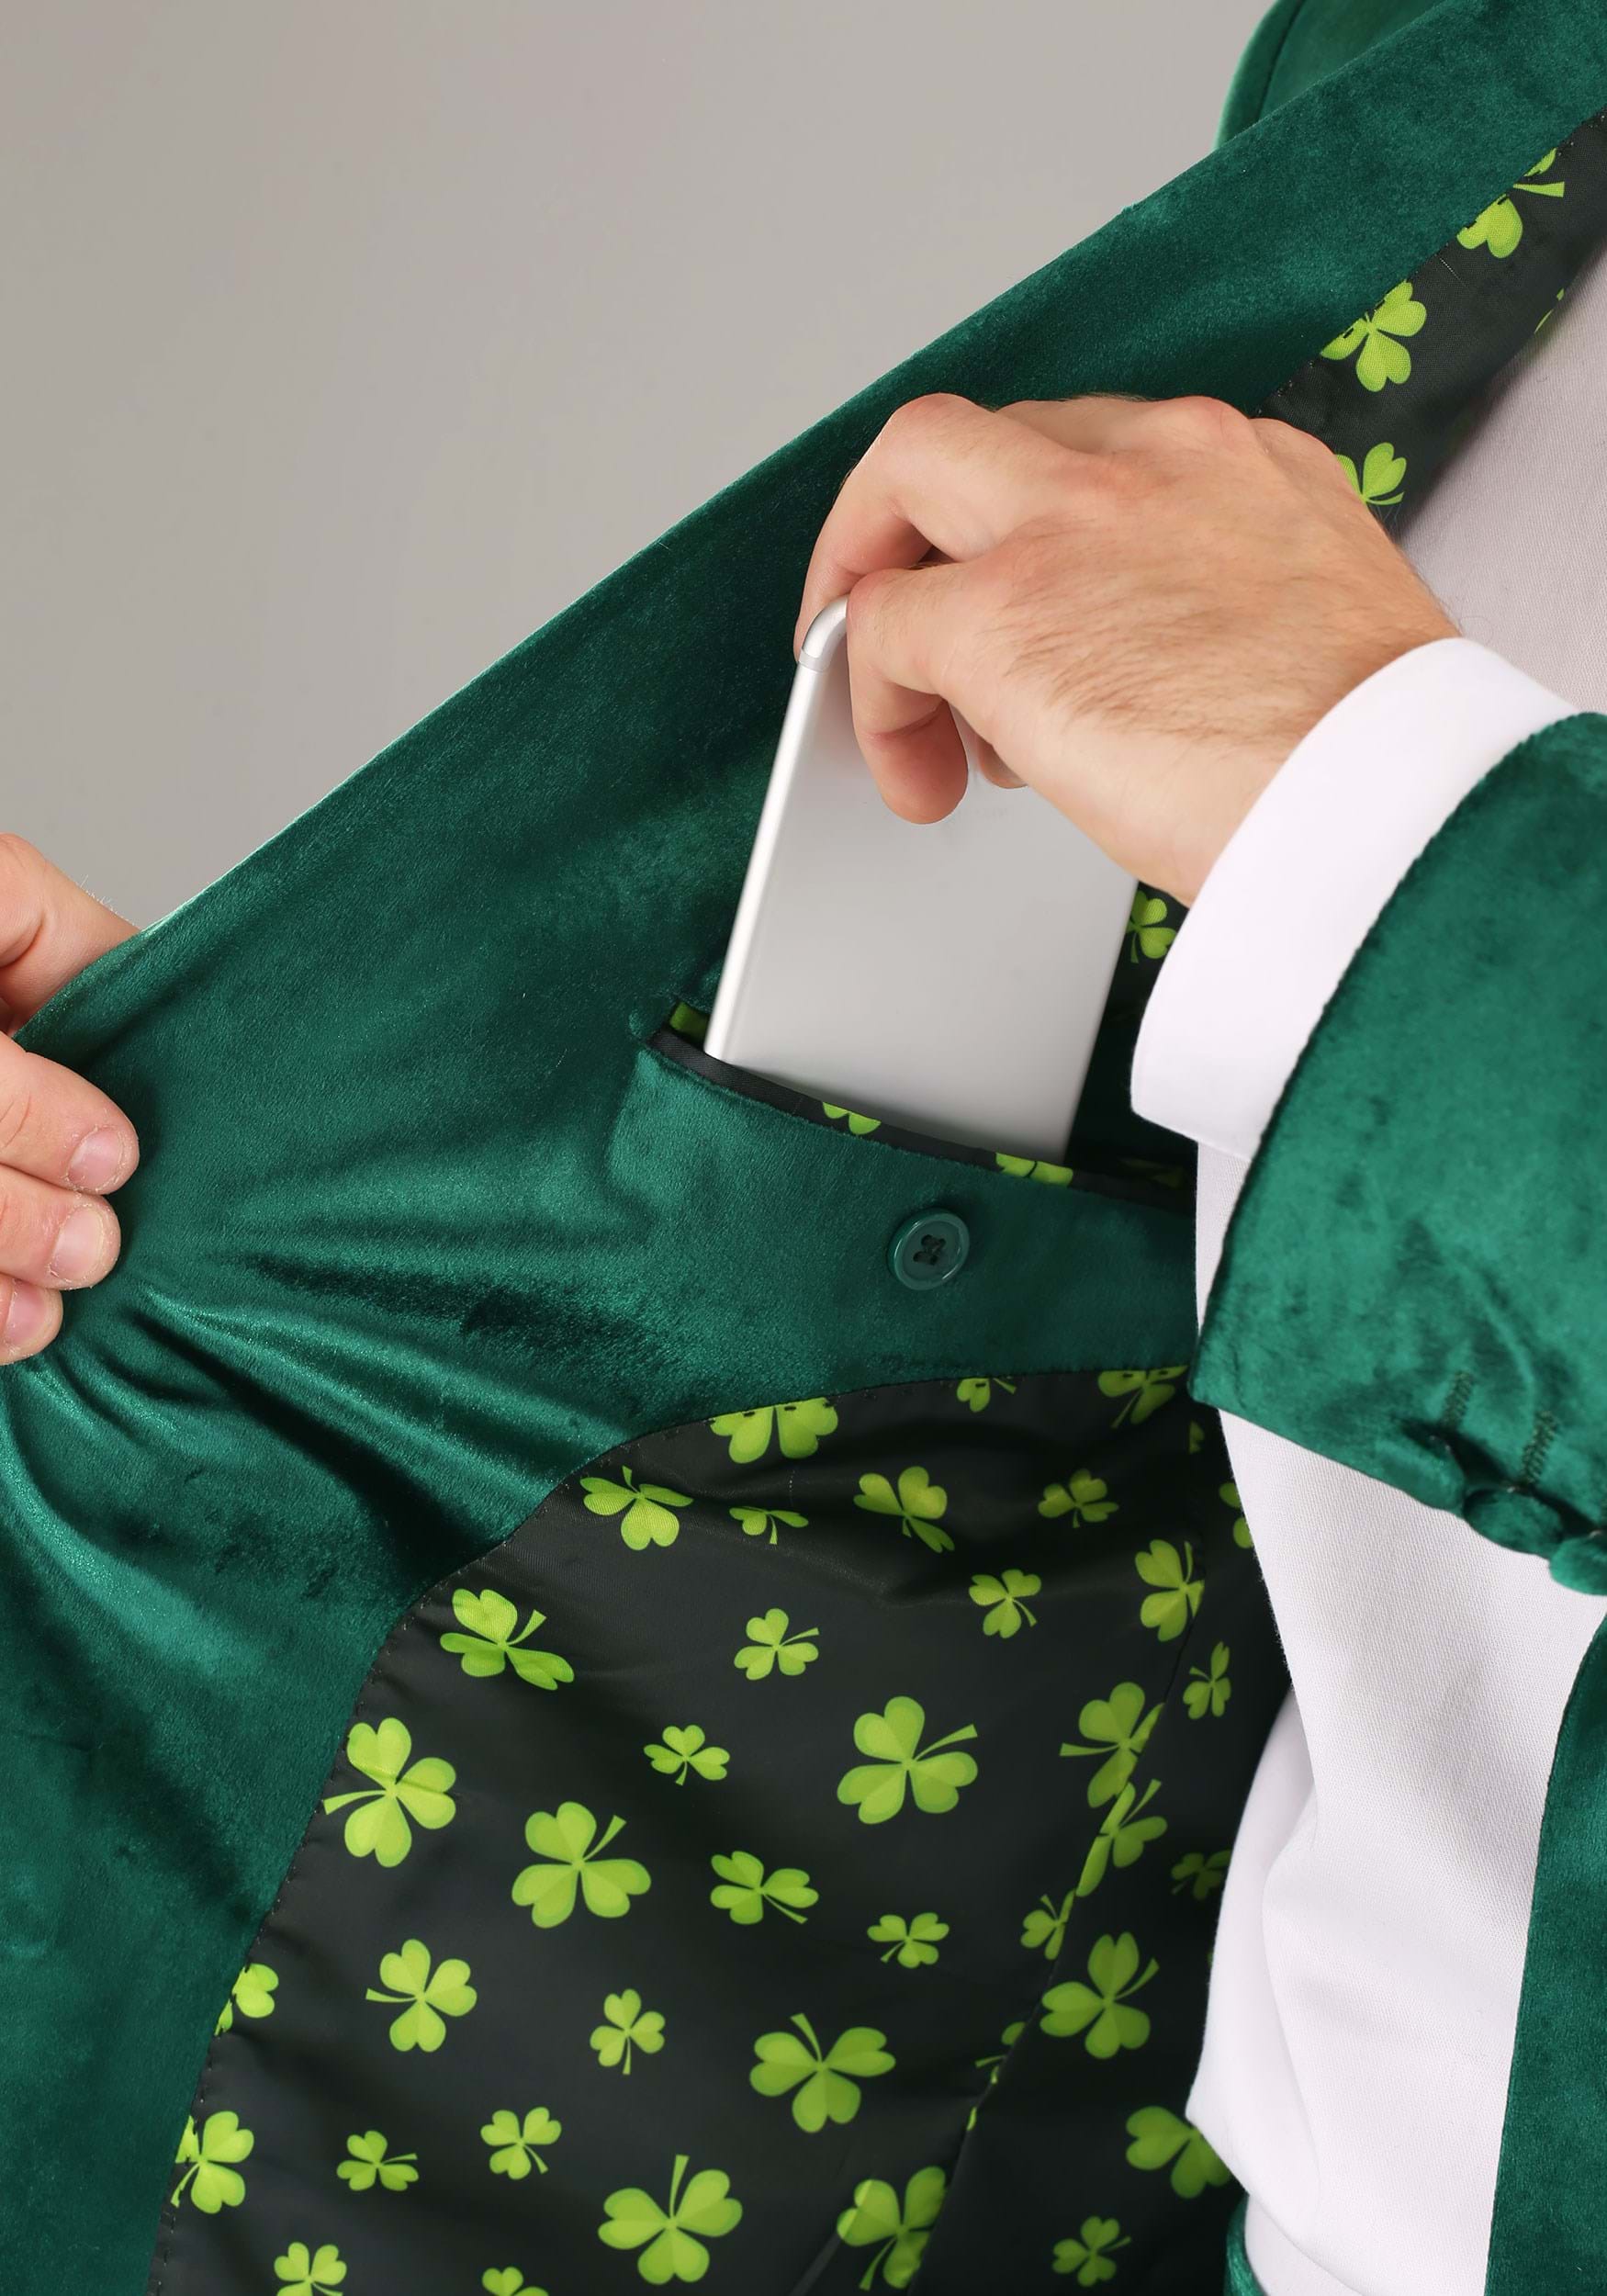 Men's Green Leprechaun Suit Fancy Dress Costume - St. Patrick's Day